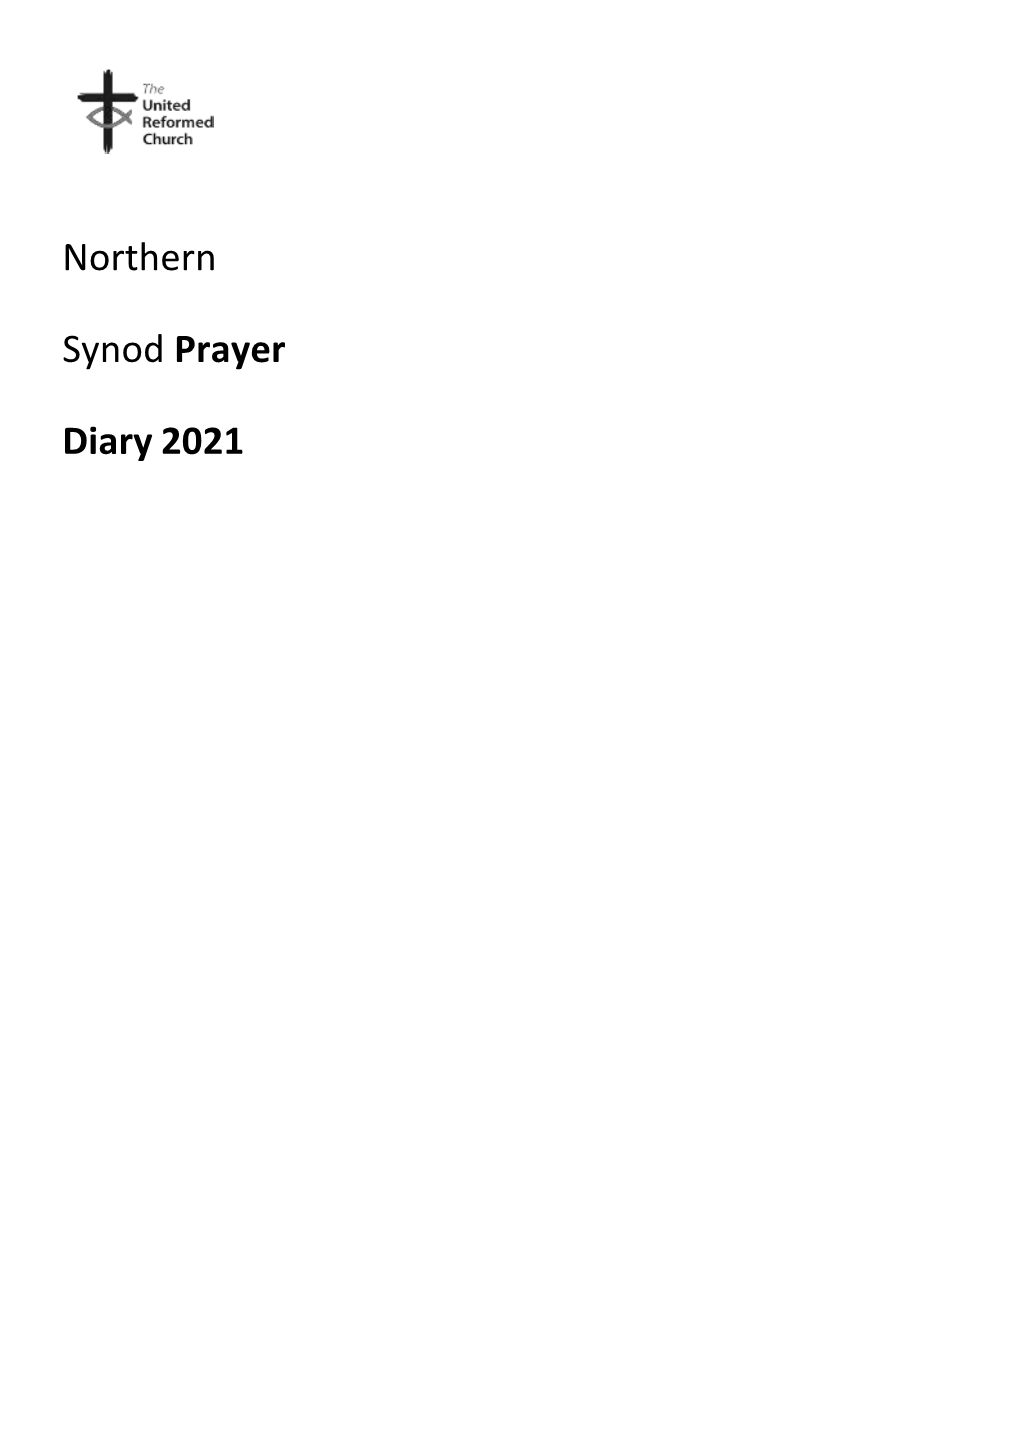 Northern Synod Prayer Diary 2021